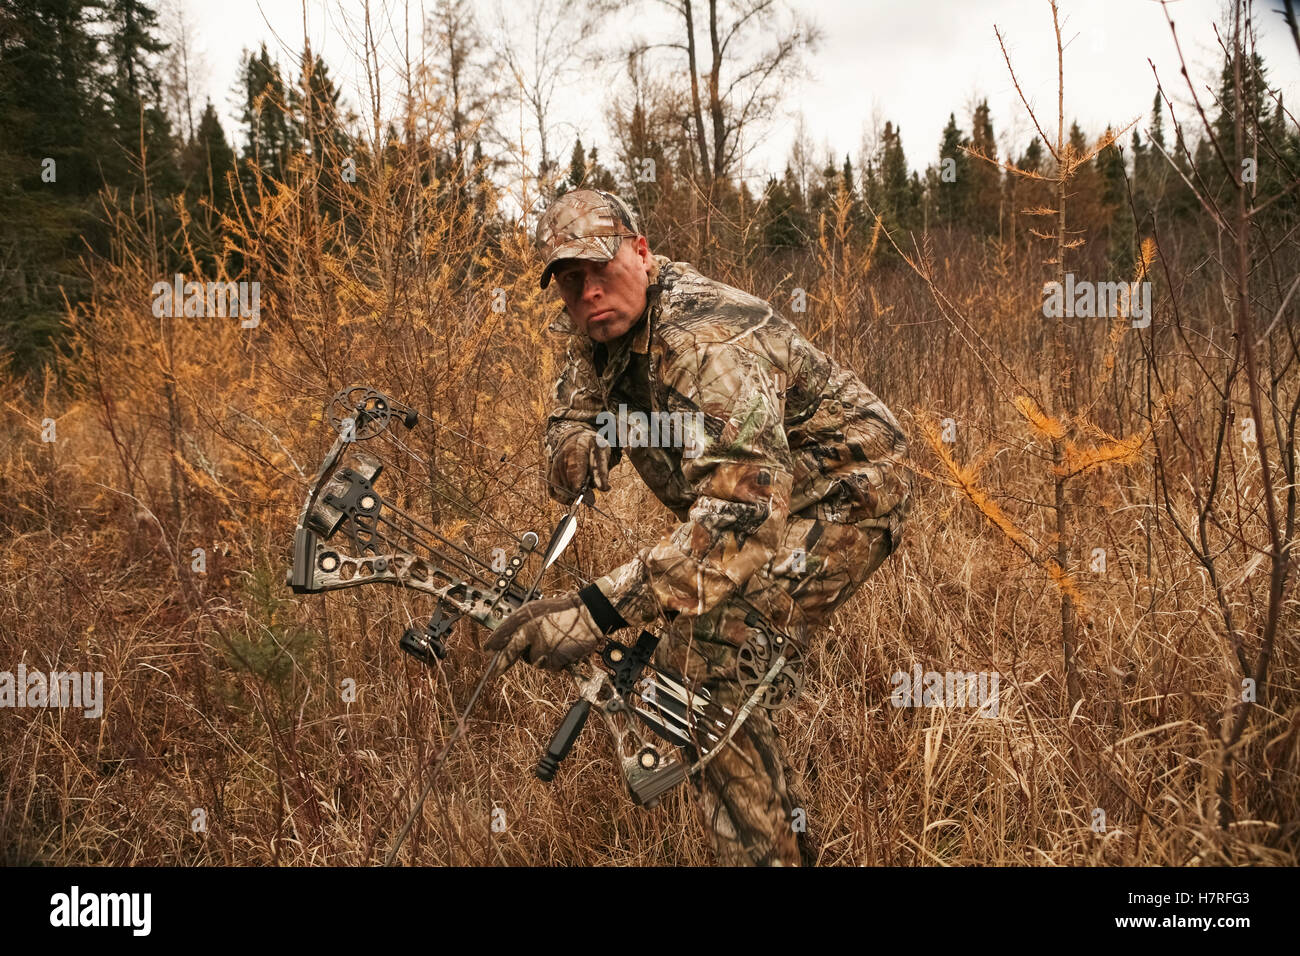 Bowhunter Ground Stalking Turkey while hunting Stock Photo